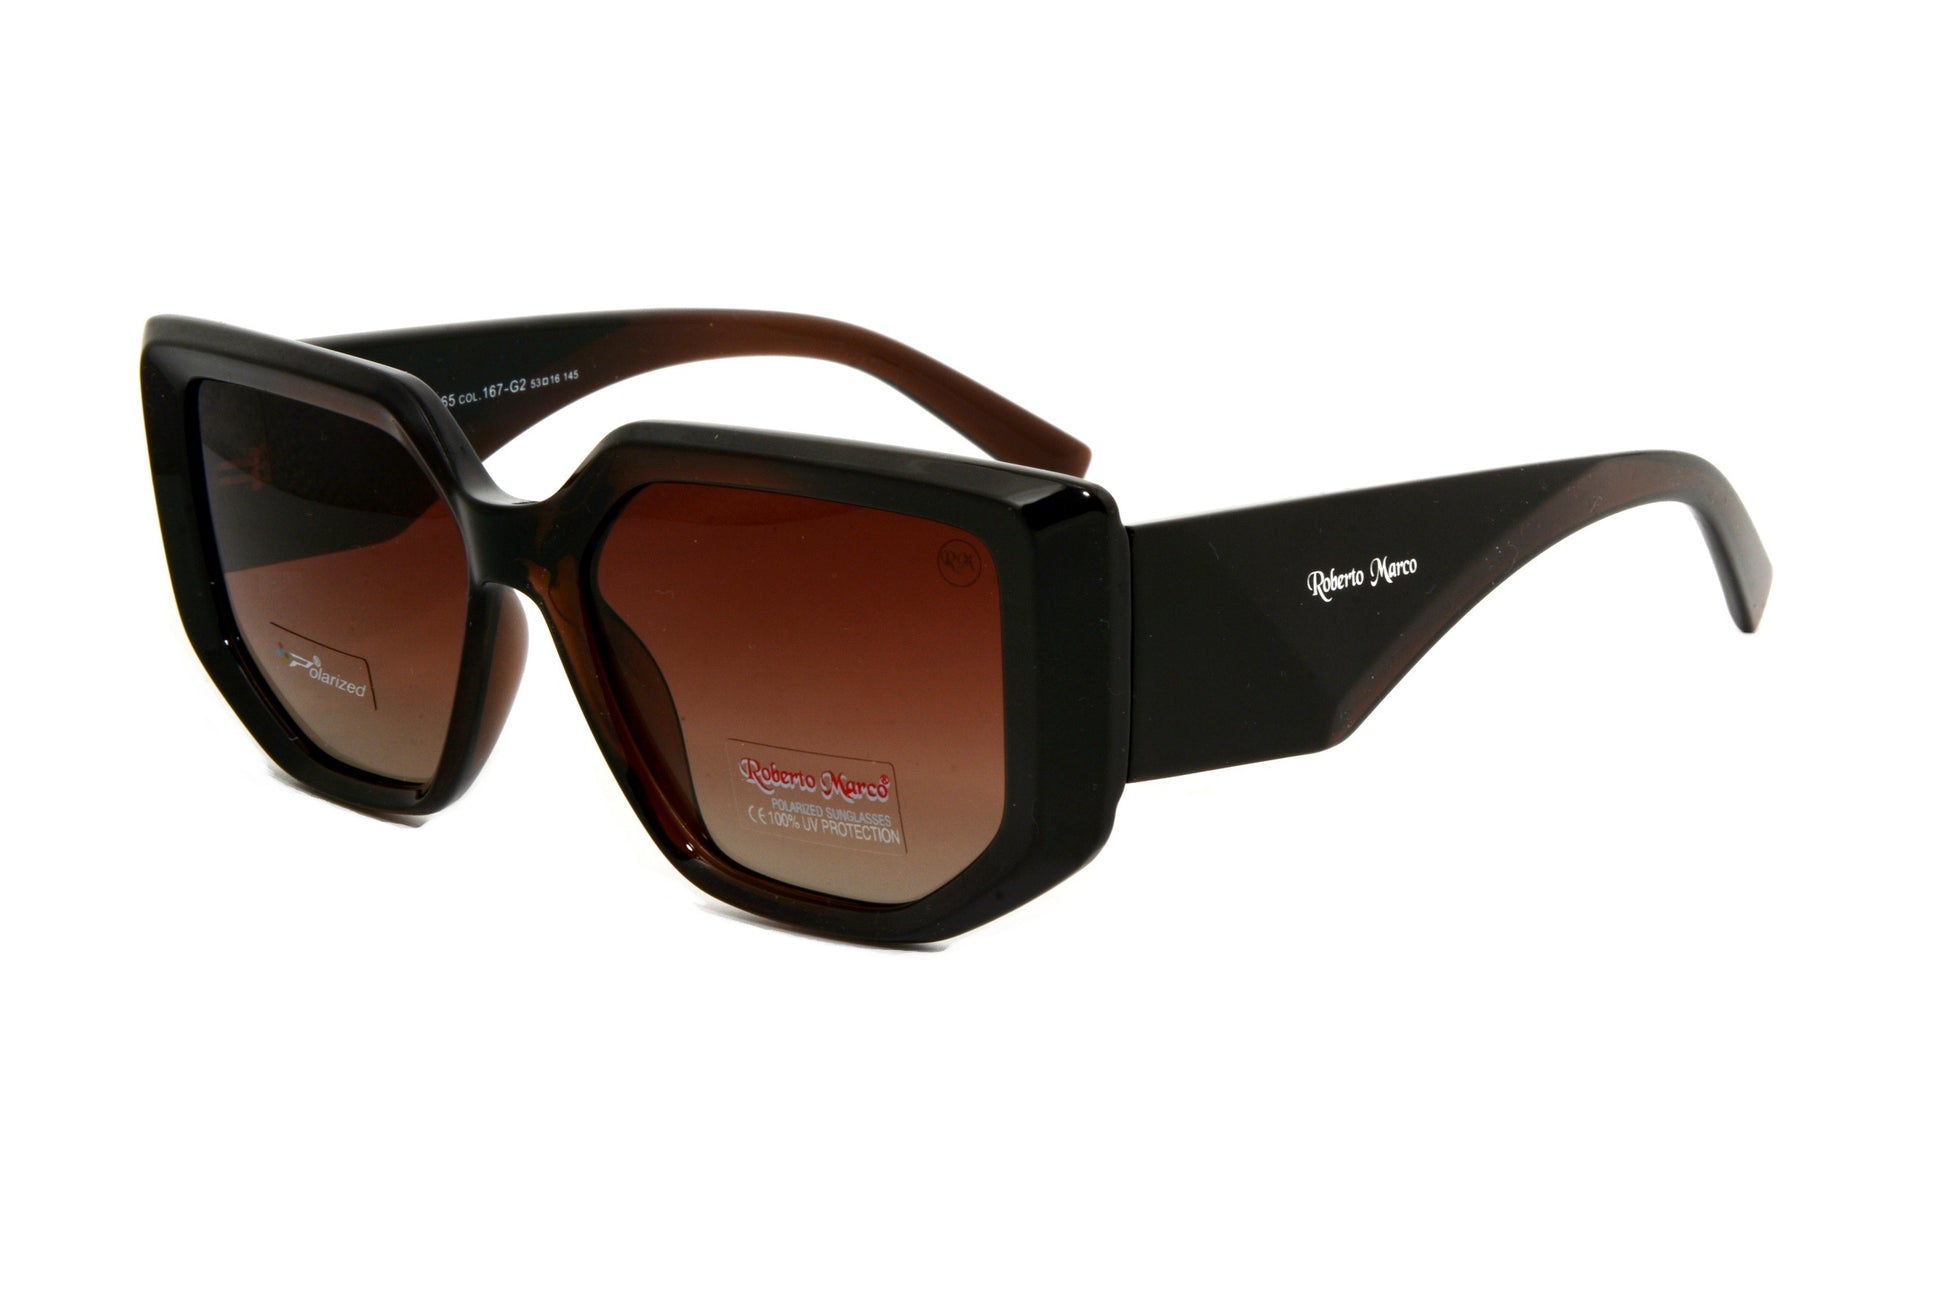 Roberto Marco sunglasses RM8465 167-G2